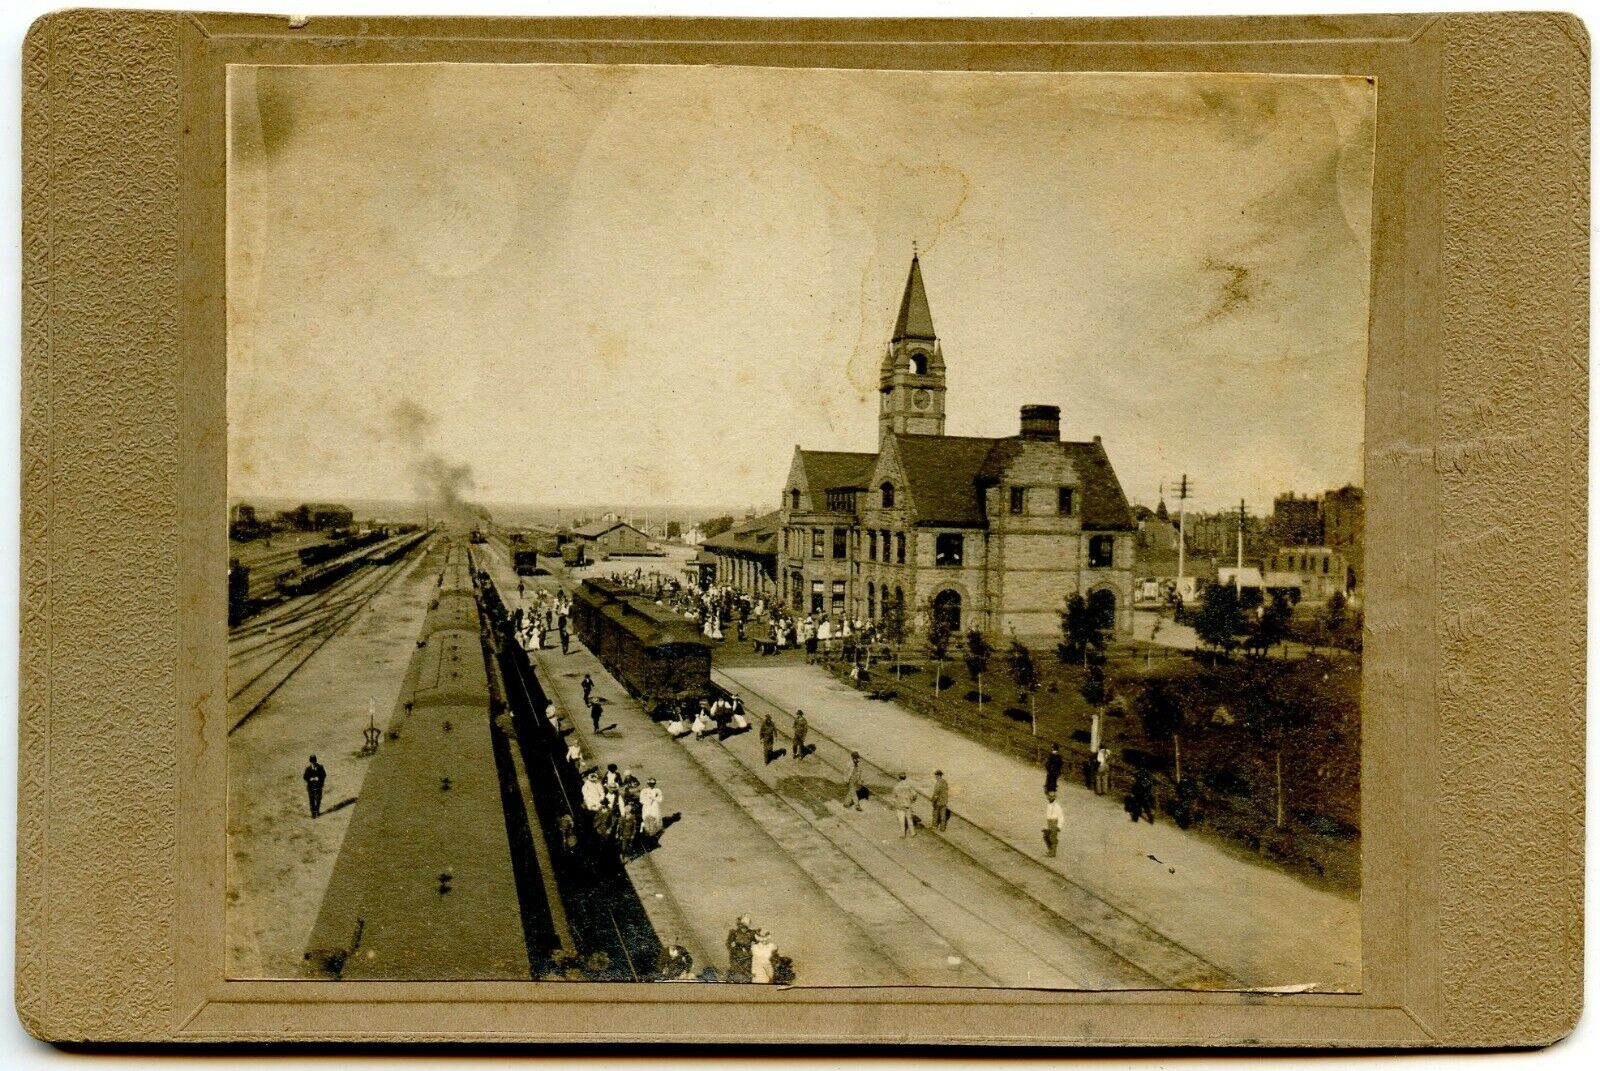 Train Station, Railroad Train Vintage Photo